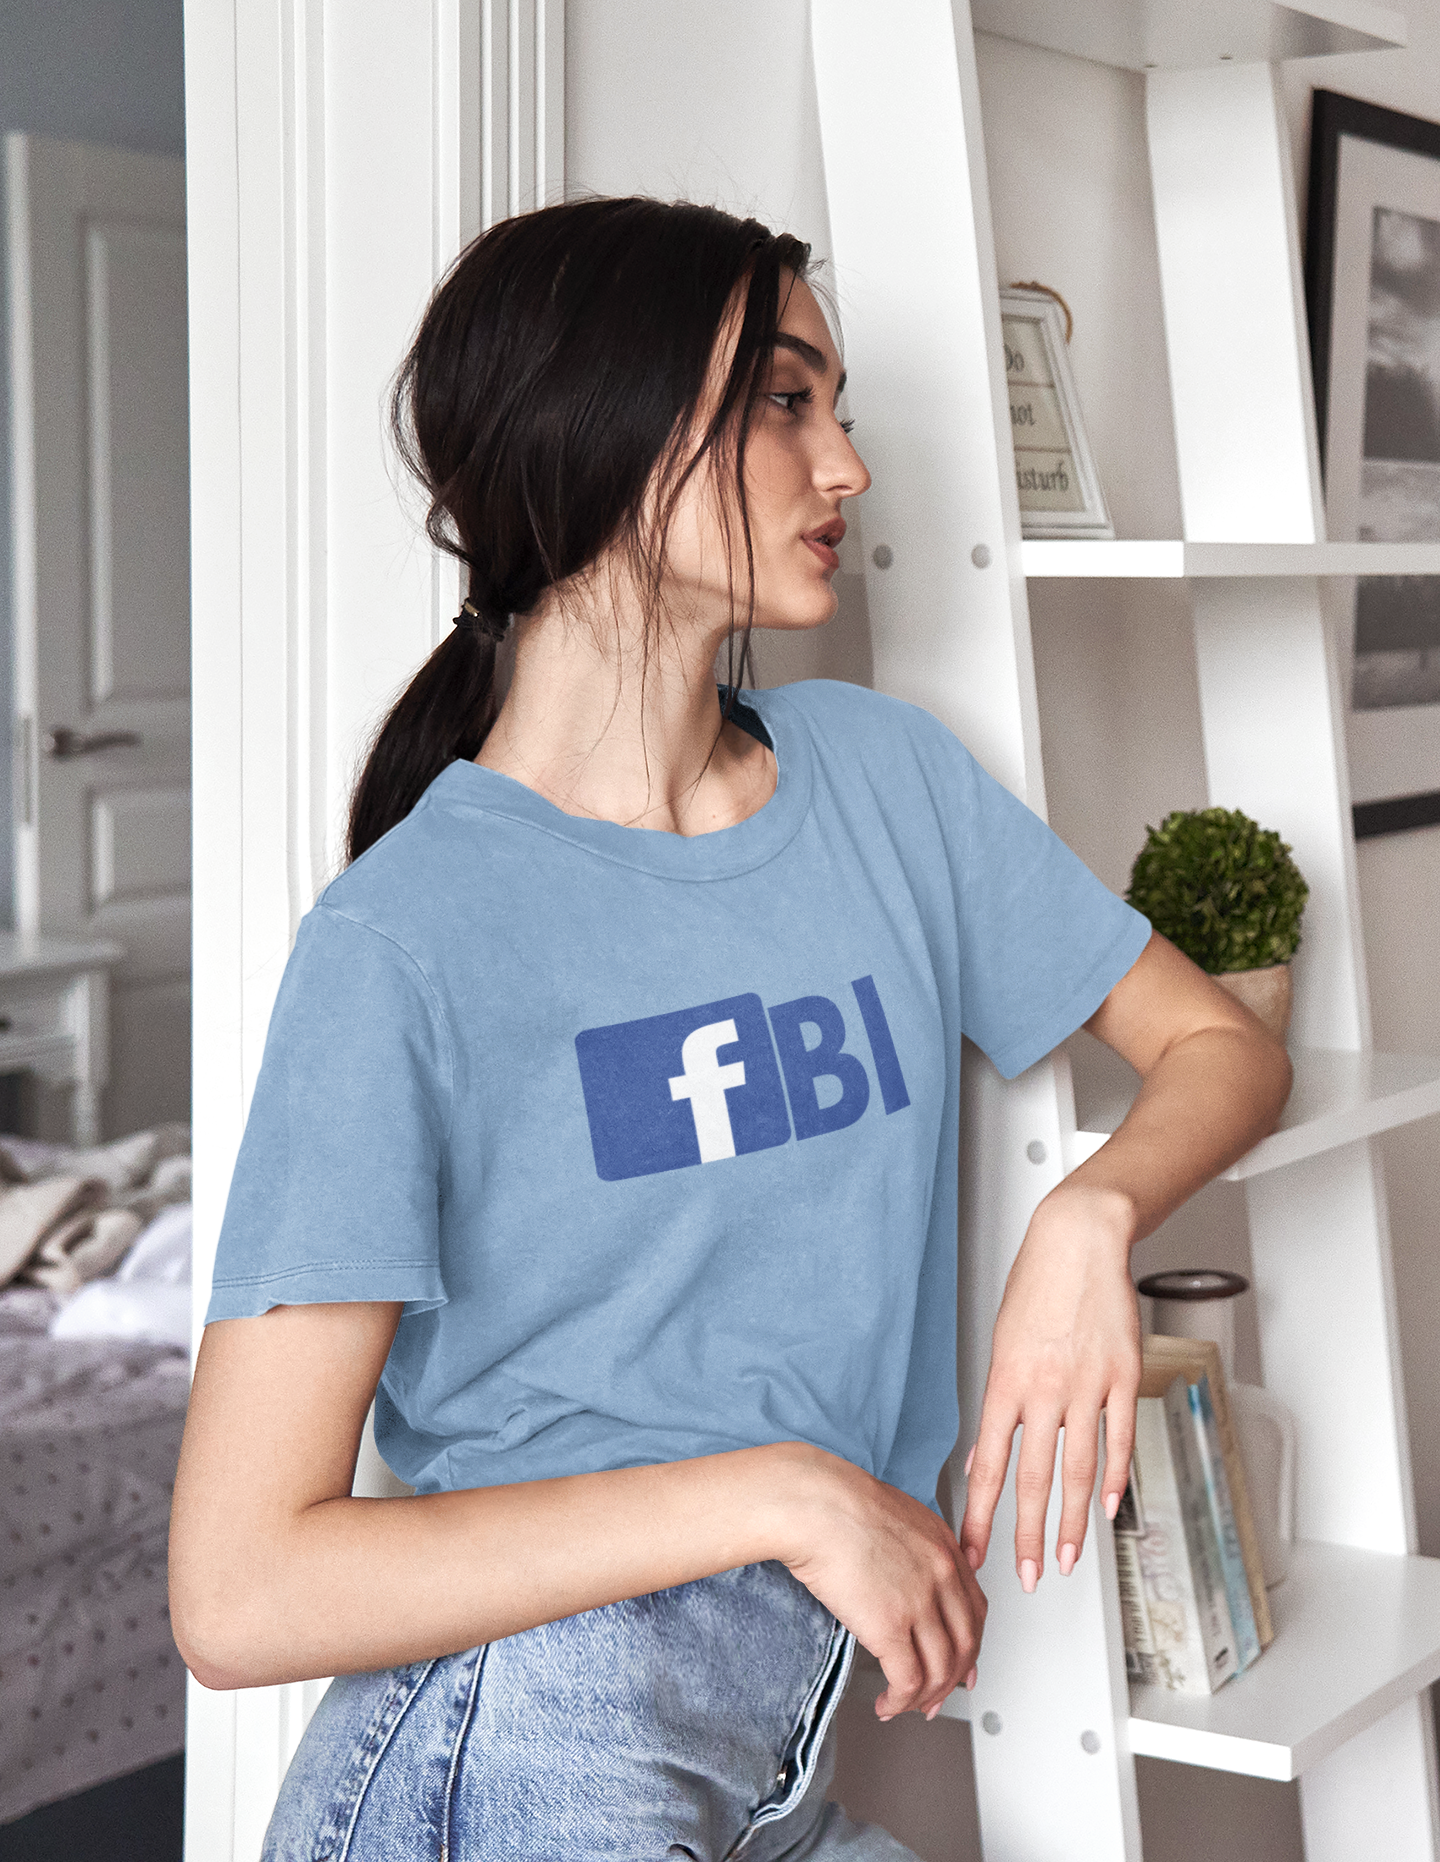 FB/FBI T-Shirt Women